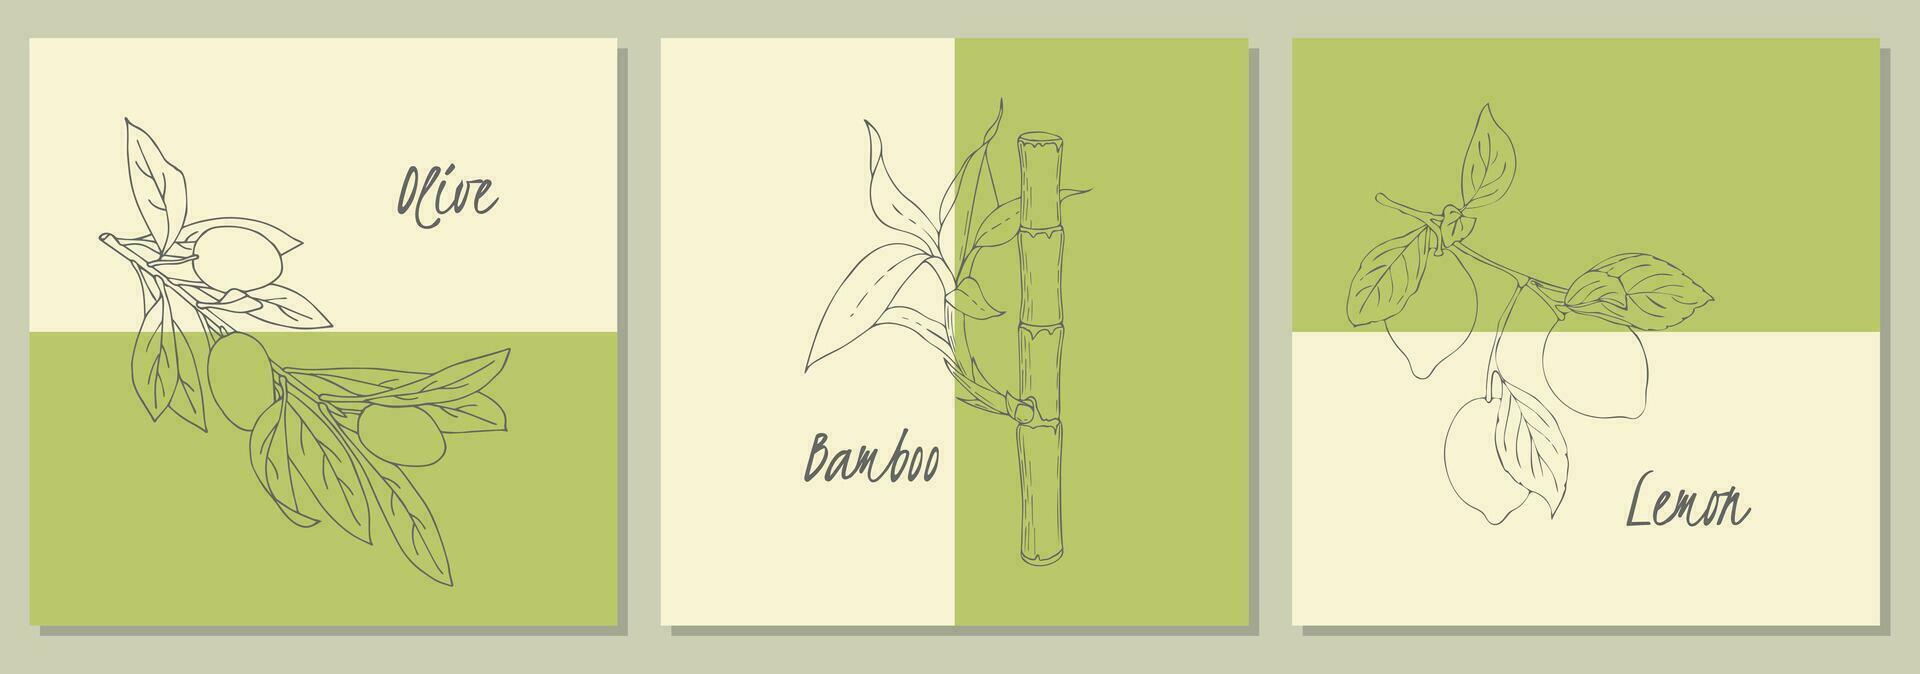 bandera conjunto con mano dibujado garabatear aceituna bambú limón. vector